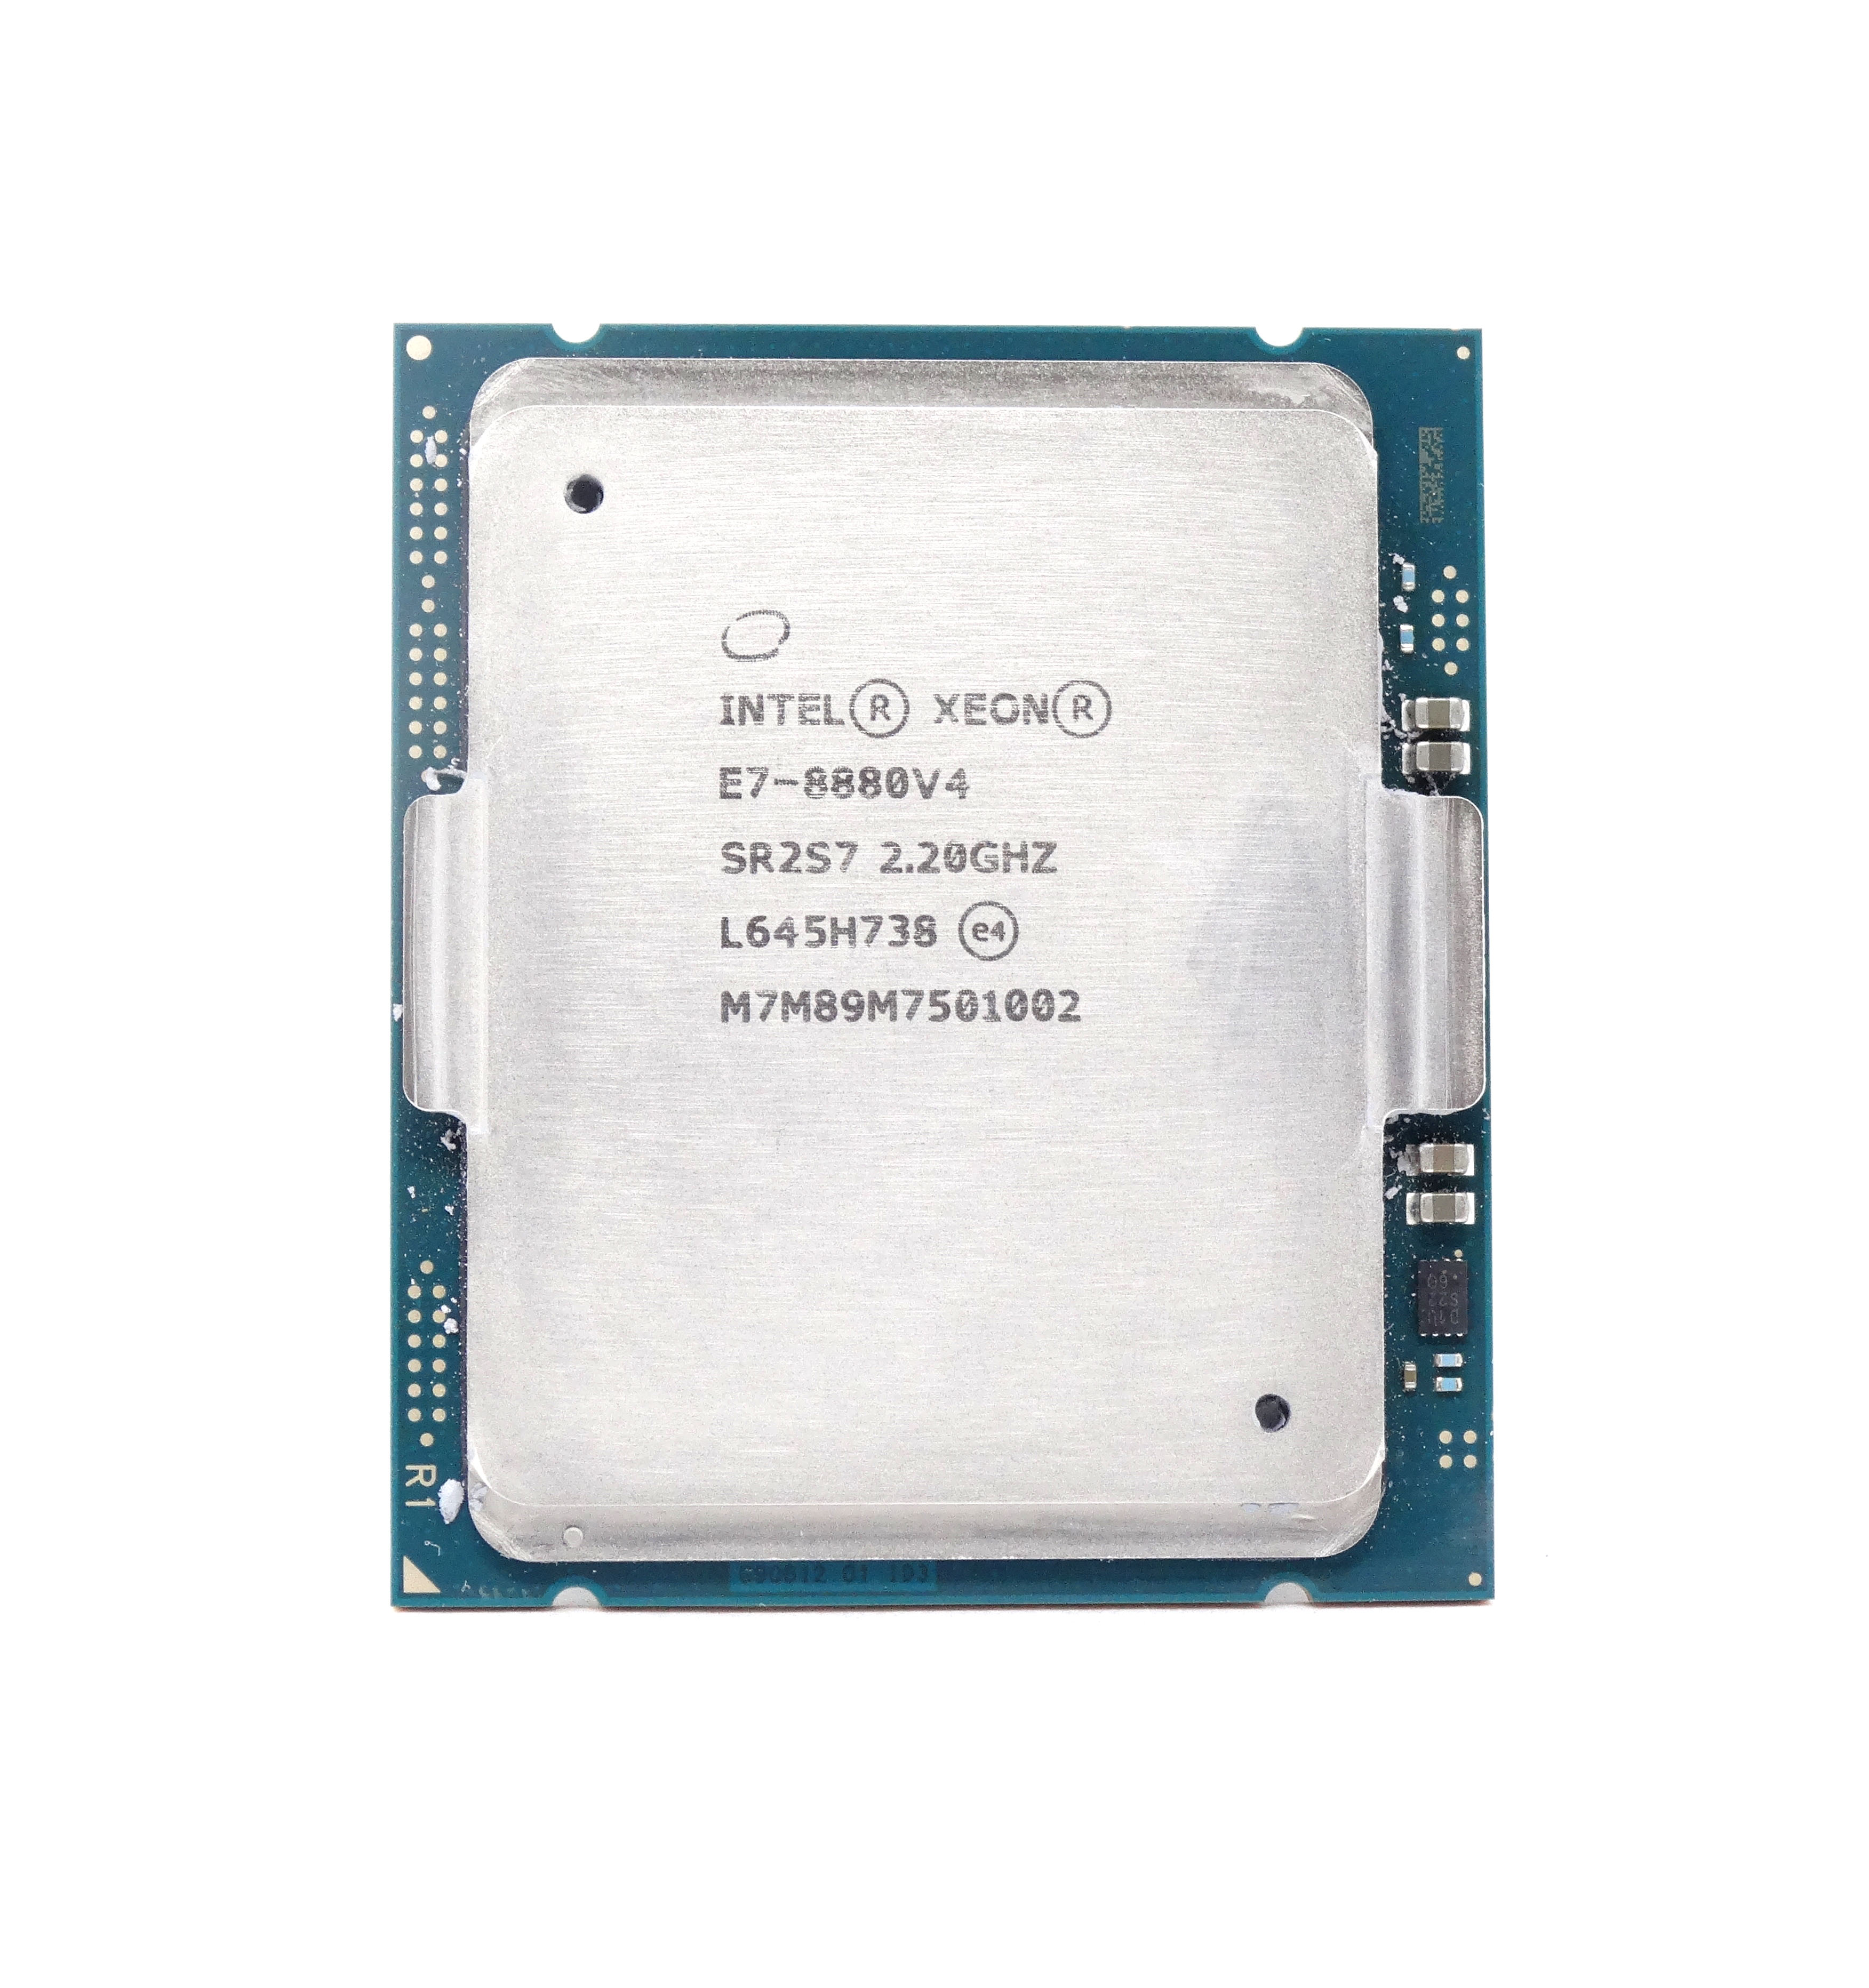 Intel Xeon E7-8880v4 2.2GHz 22 Core 55MB LGA2011 CPU Processor (E7-8880V4)